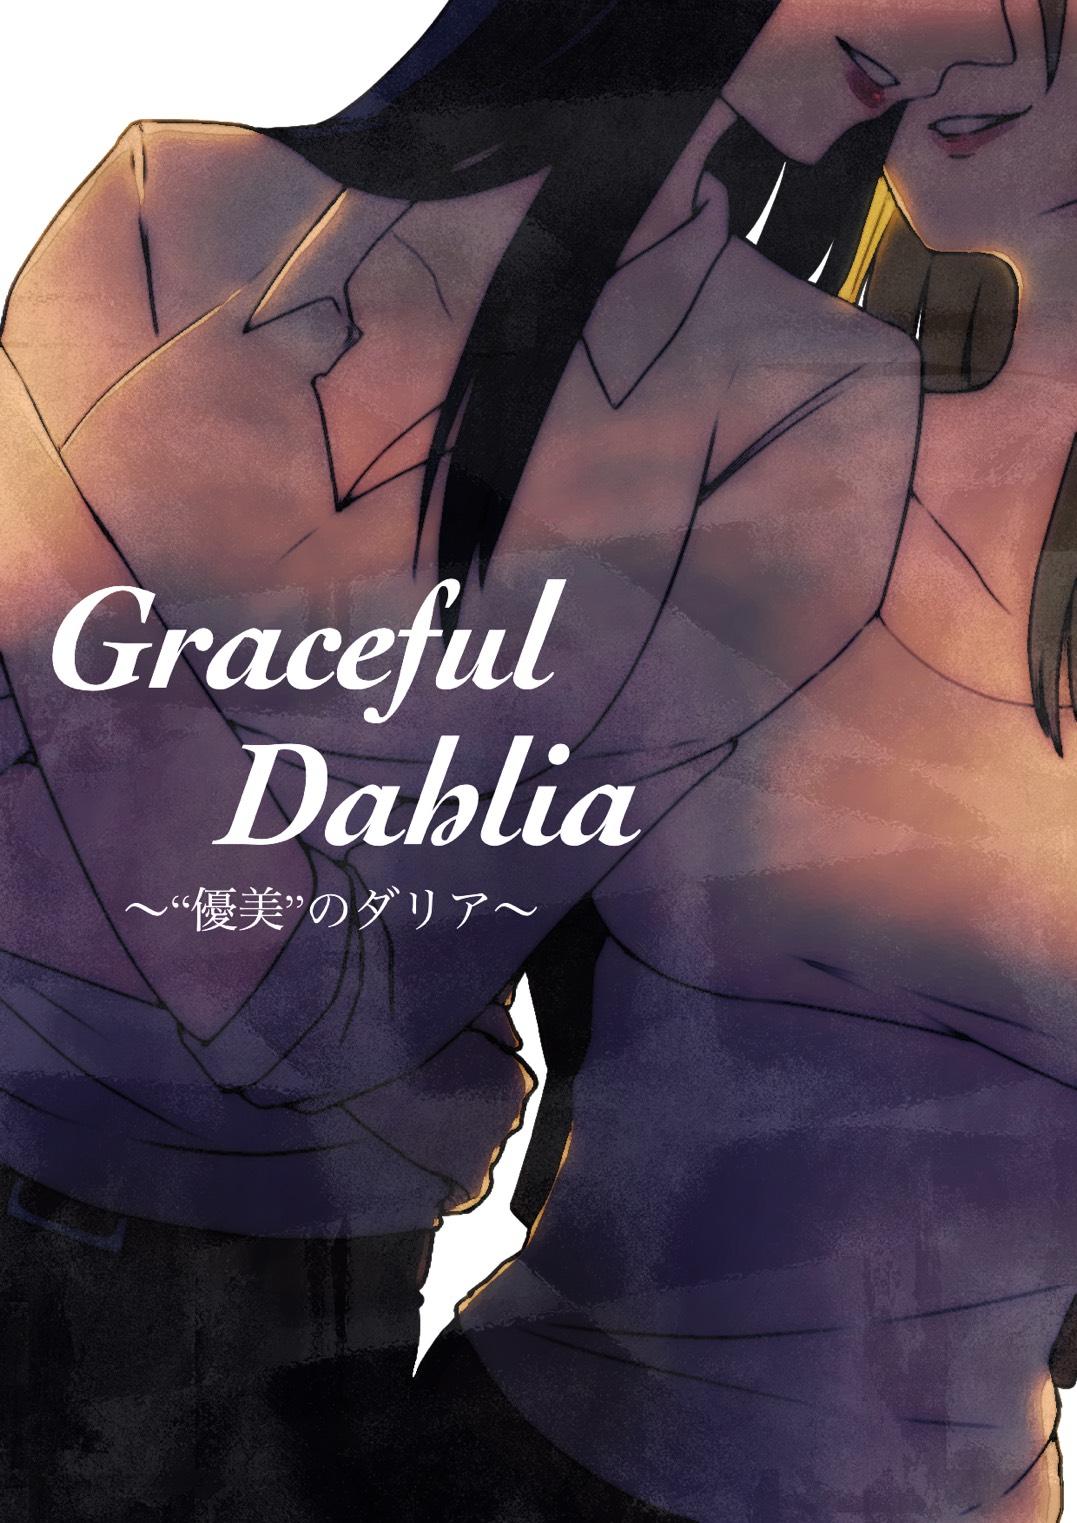 Graceful Dahlia [星空の下]  0